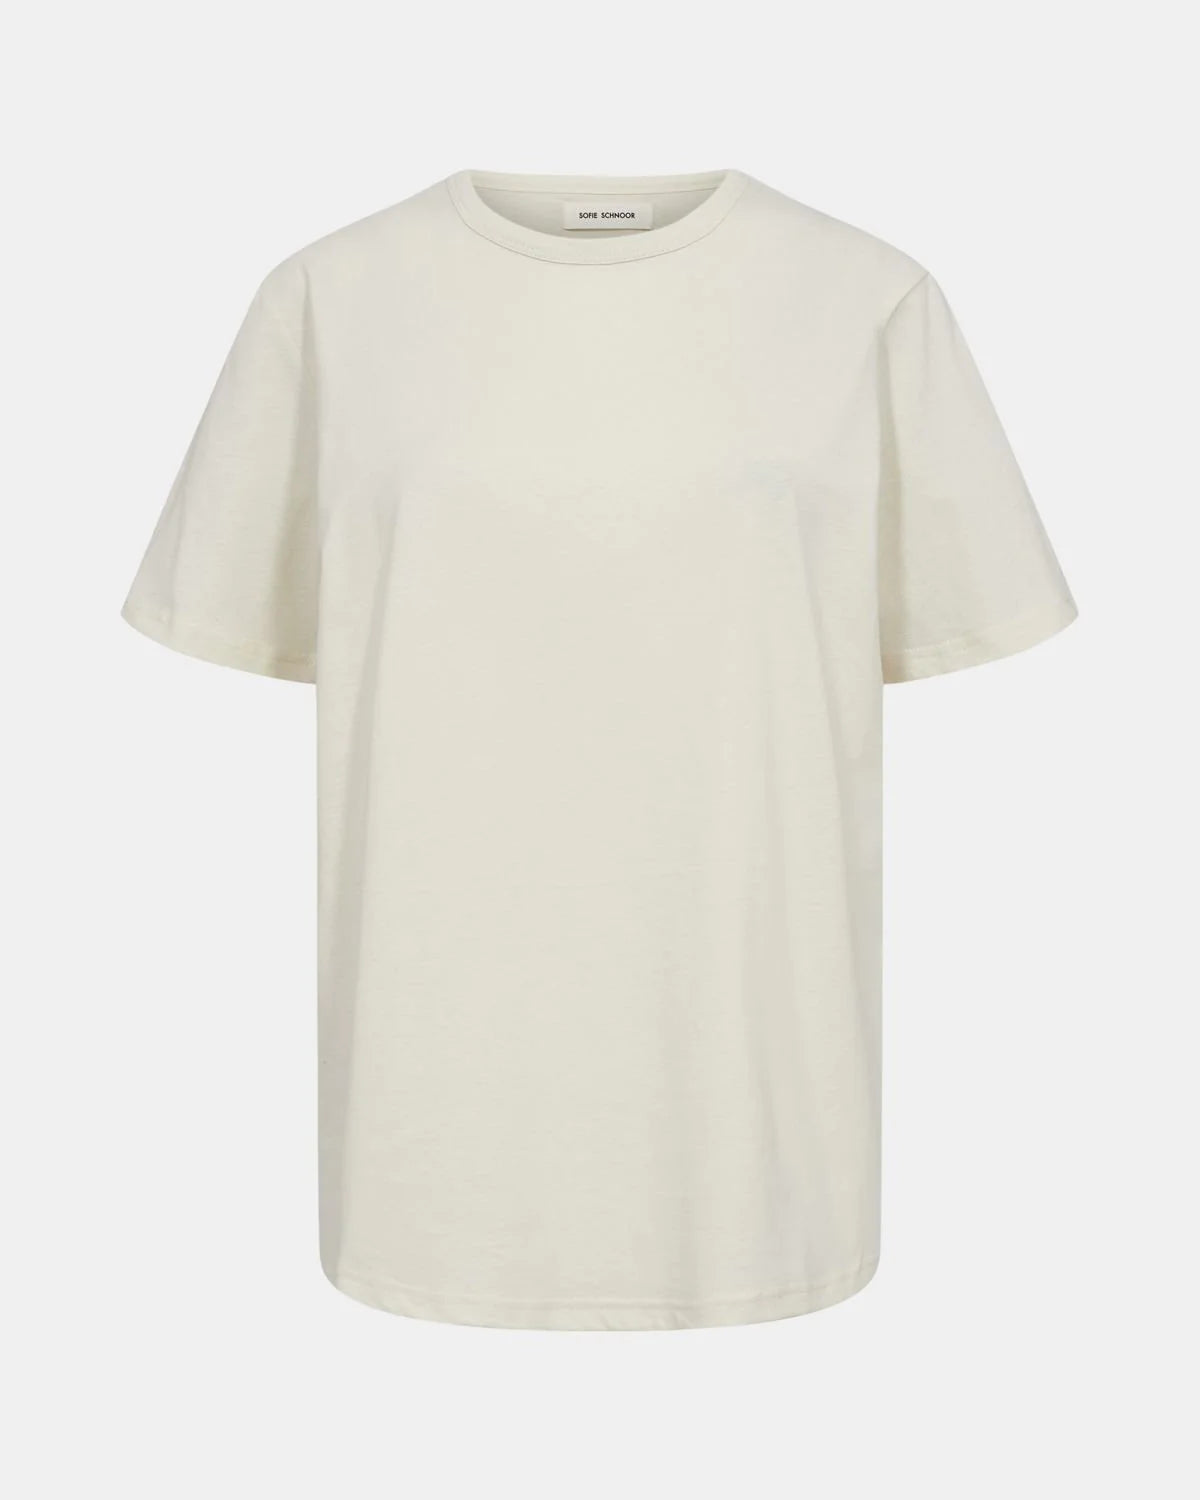 Sofie Schnoor T-shirt Off-White